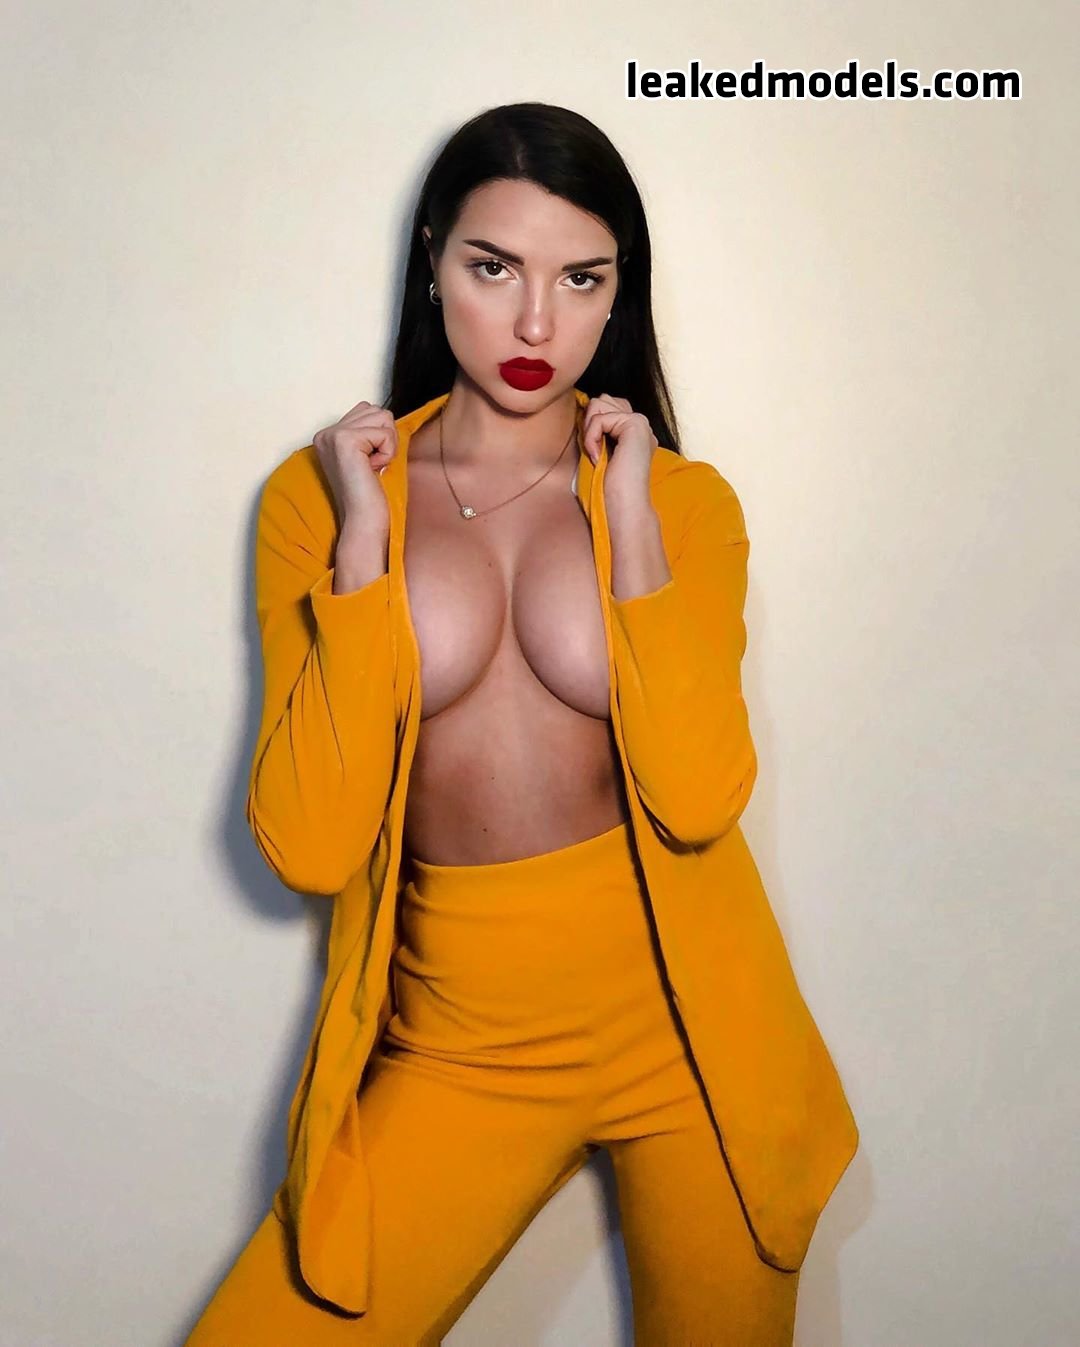 ilana kostrova   ilanosh leaked nude leakedmodels.com 0025 - Ilana Kostrova – Ilanosh Instagram Nude Leaks (37 Photos)